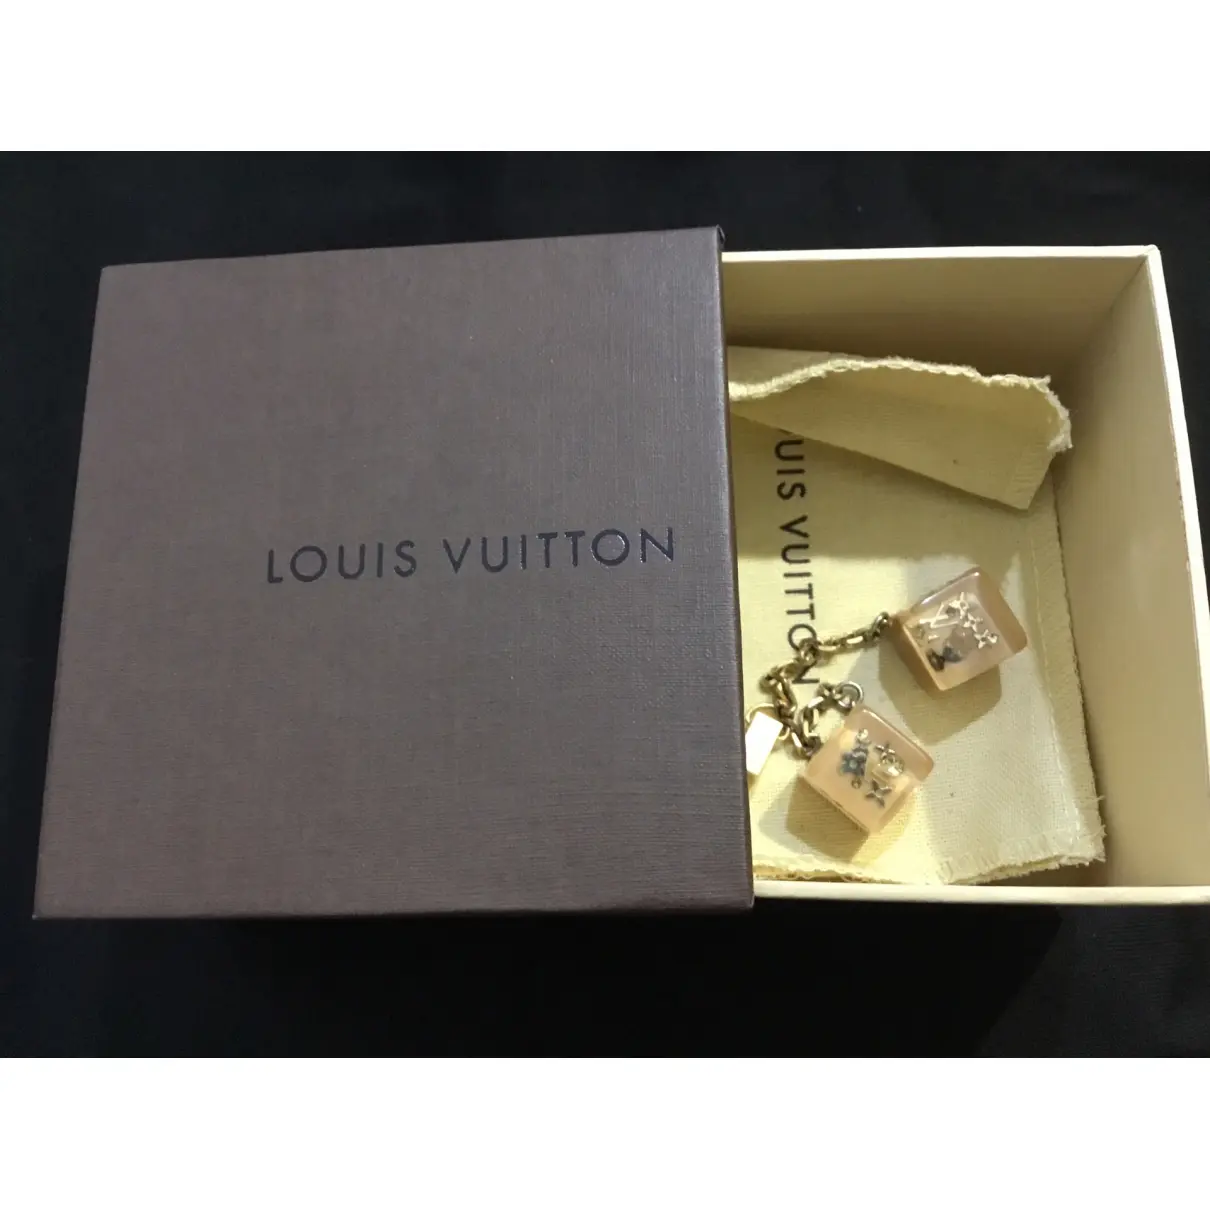 Crystal phone charm Louis Vuitton - Vintage